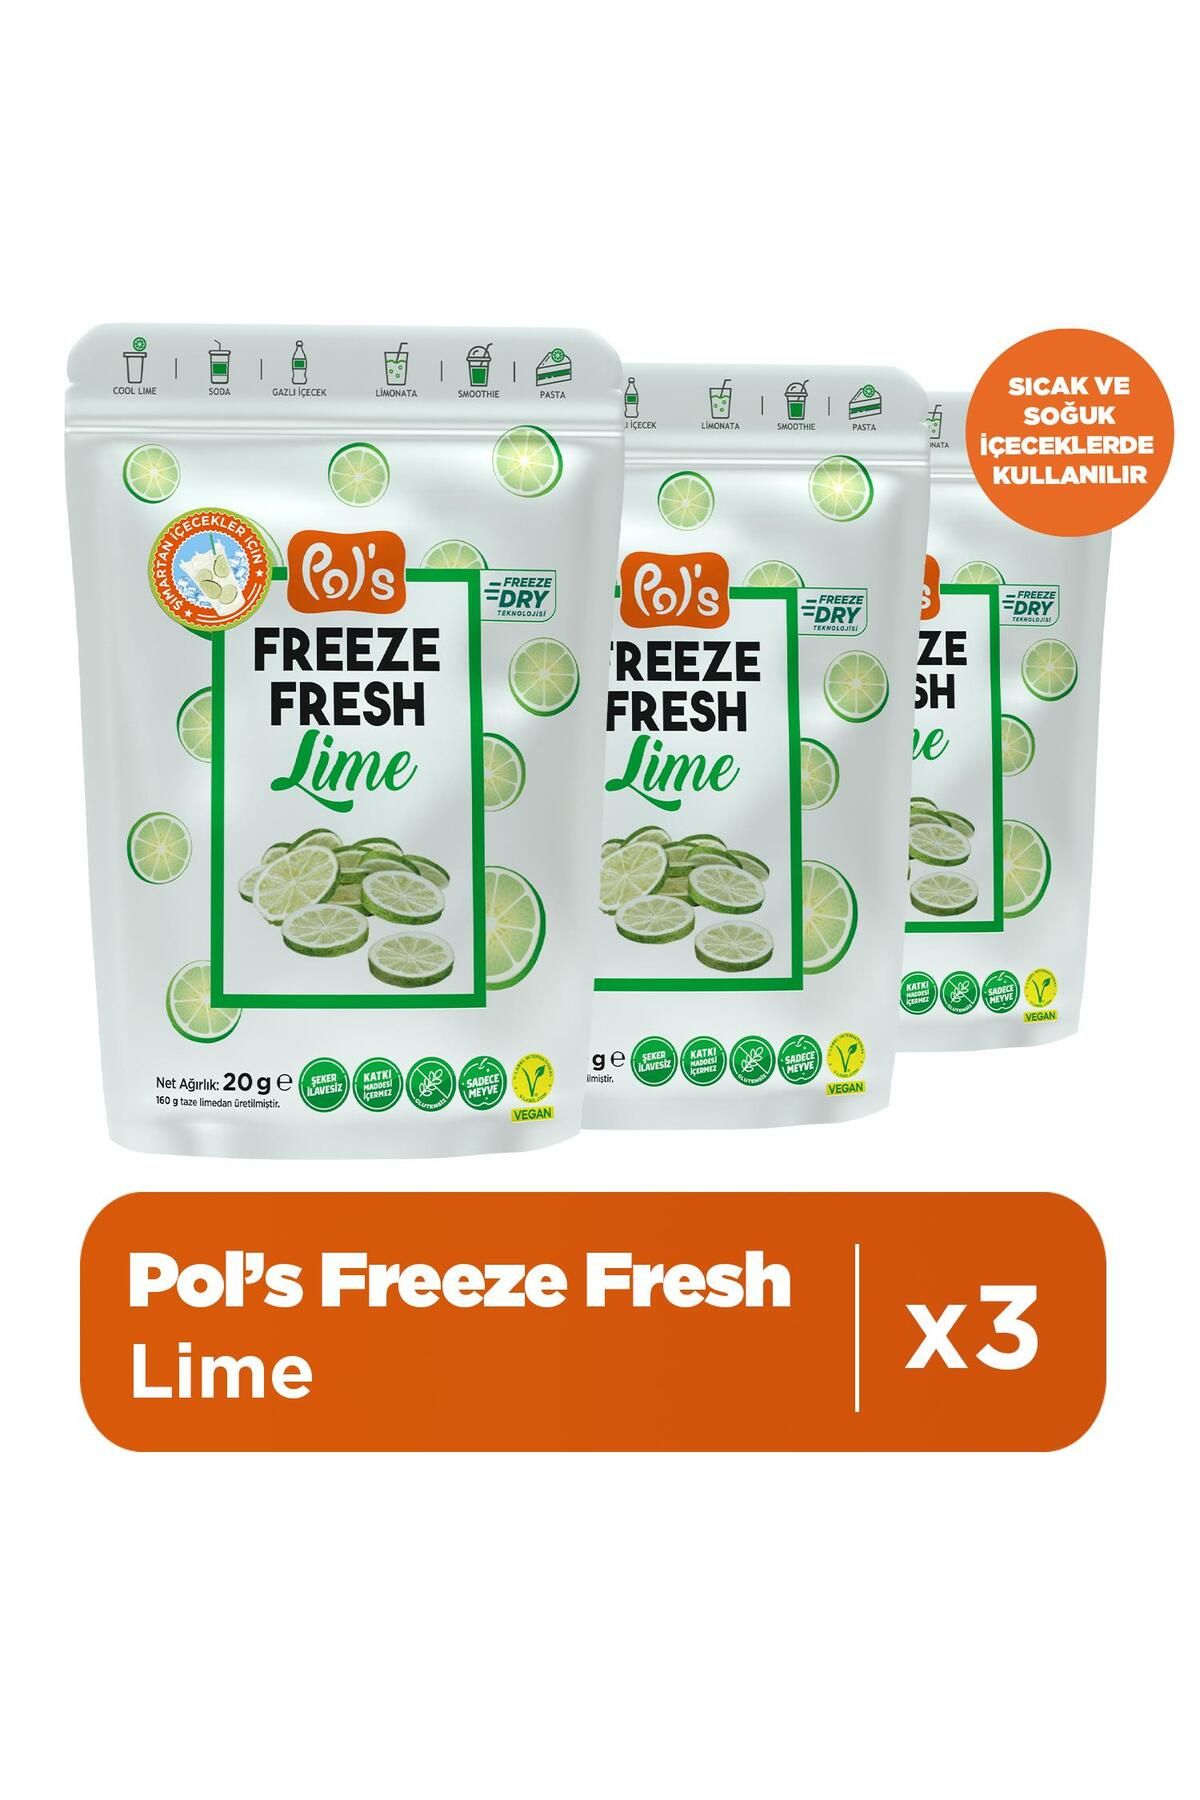 Pol's Freeze Fresh Lime 20 G X 3 Adet Freeze Dry Dondurularak Kurutulmuş Meyve